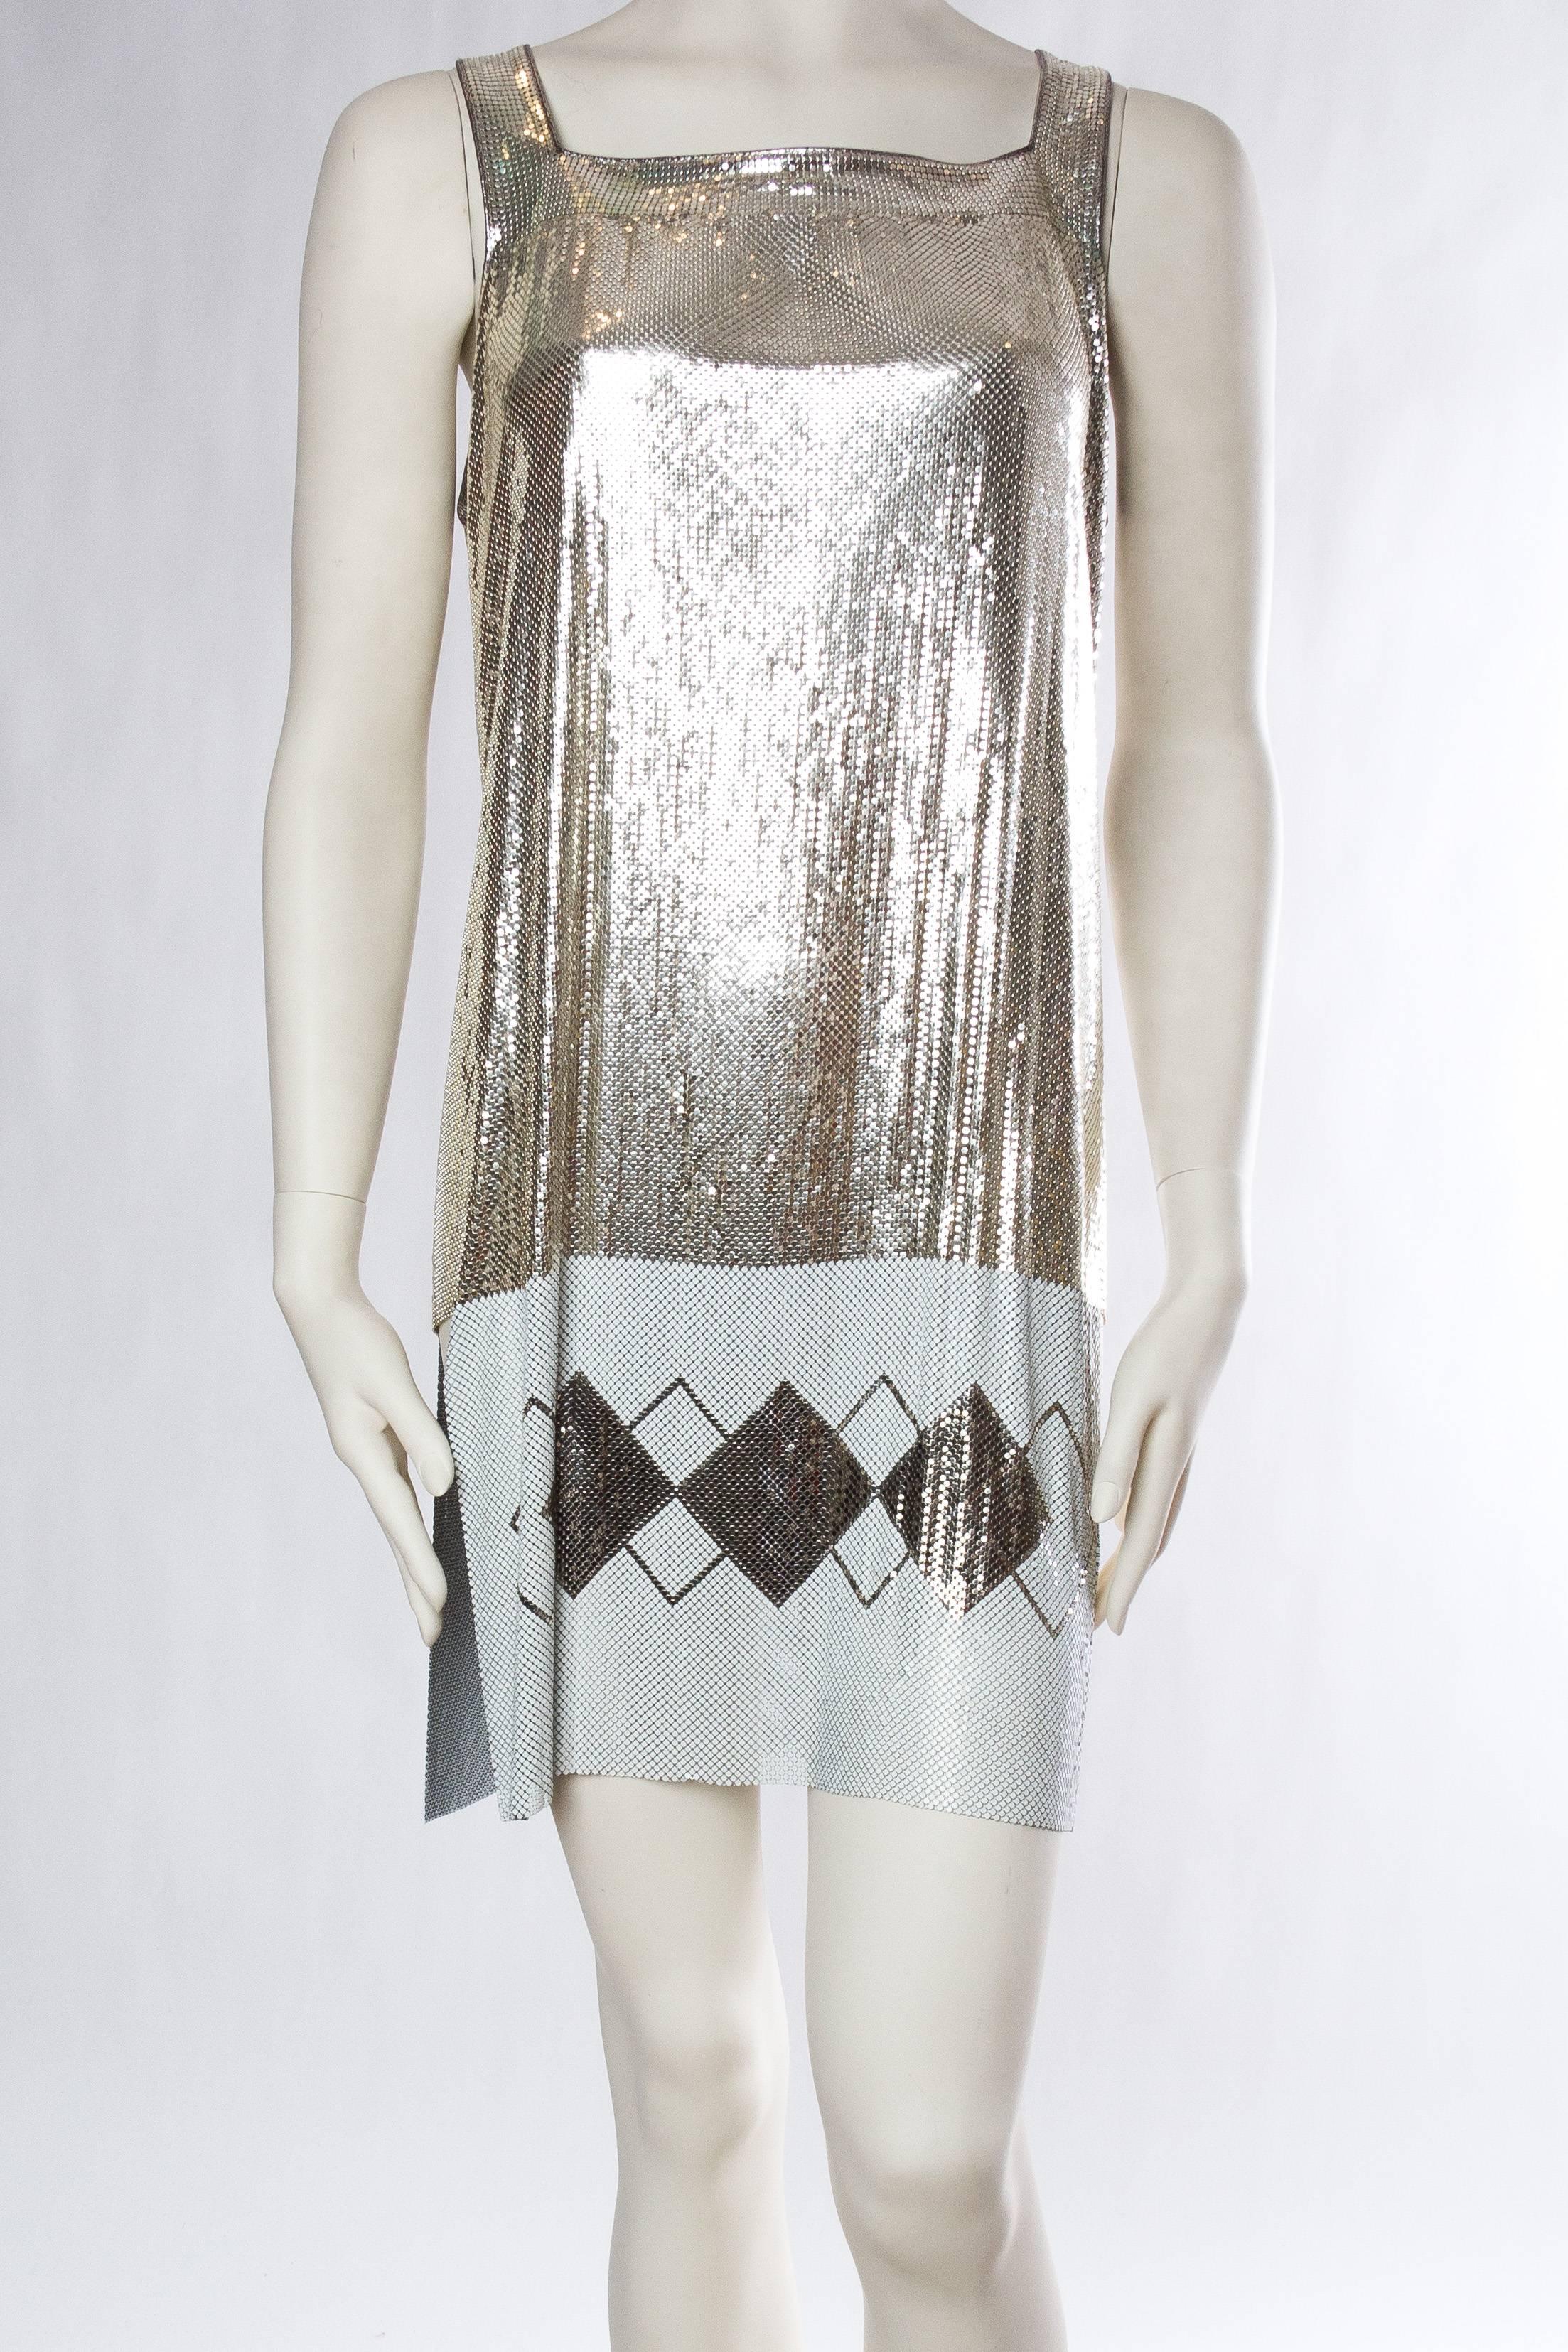 MORPHEW COLLECTION Silber & Weiß Metall Mesh Deco gemustert  Cocktail-Kleid Wit (Grau) im Angebot